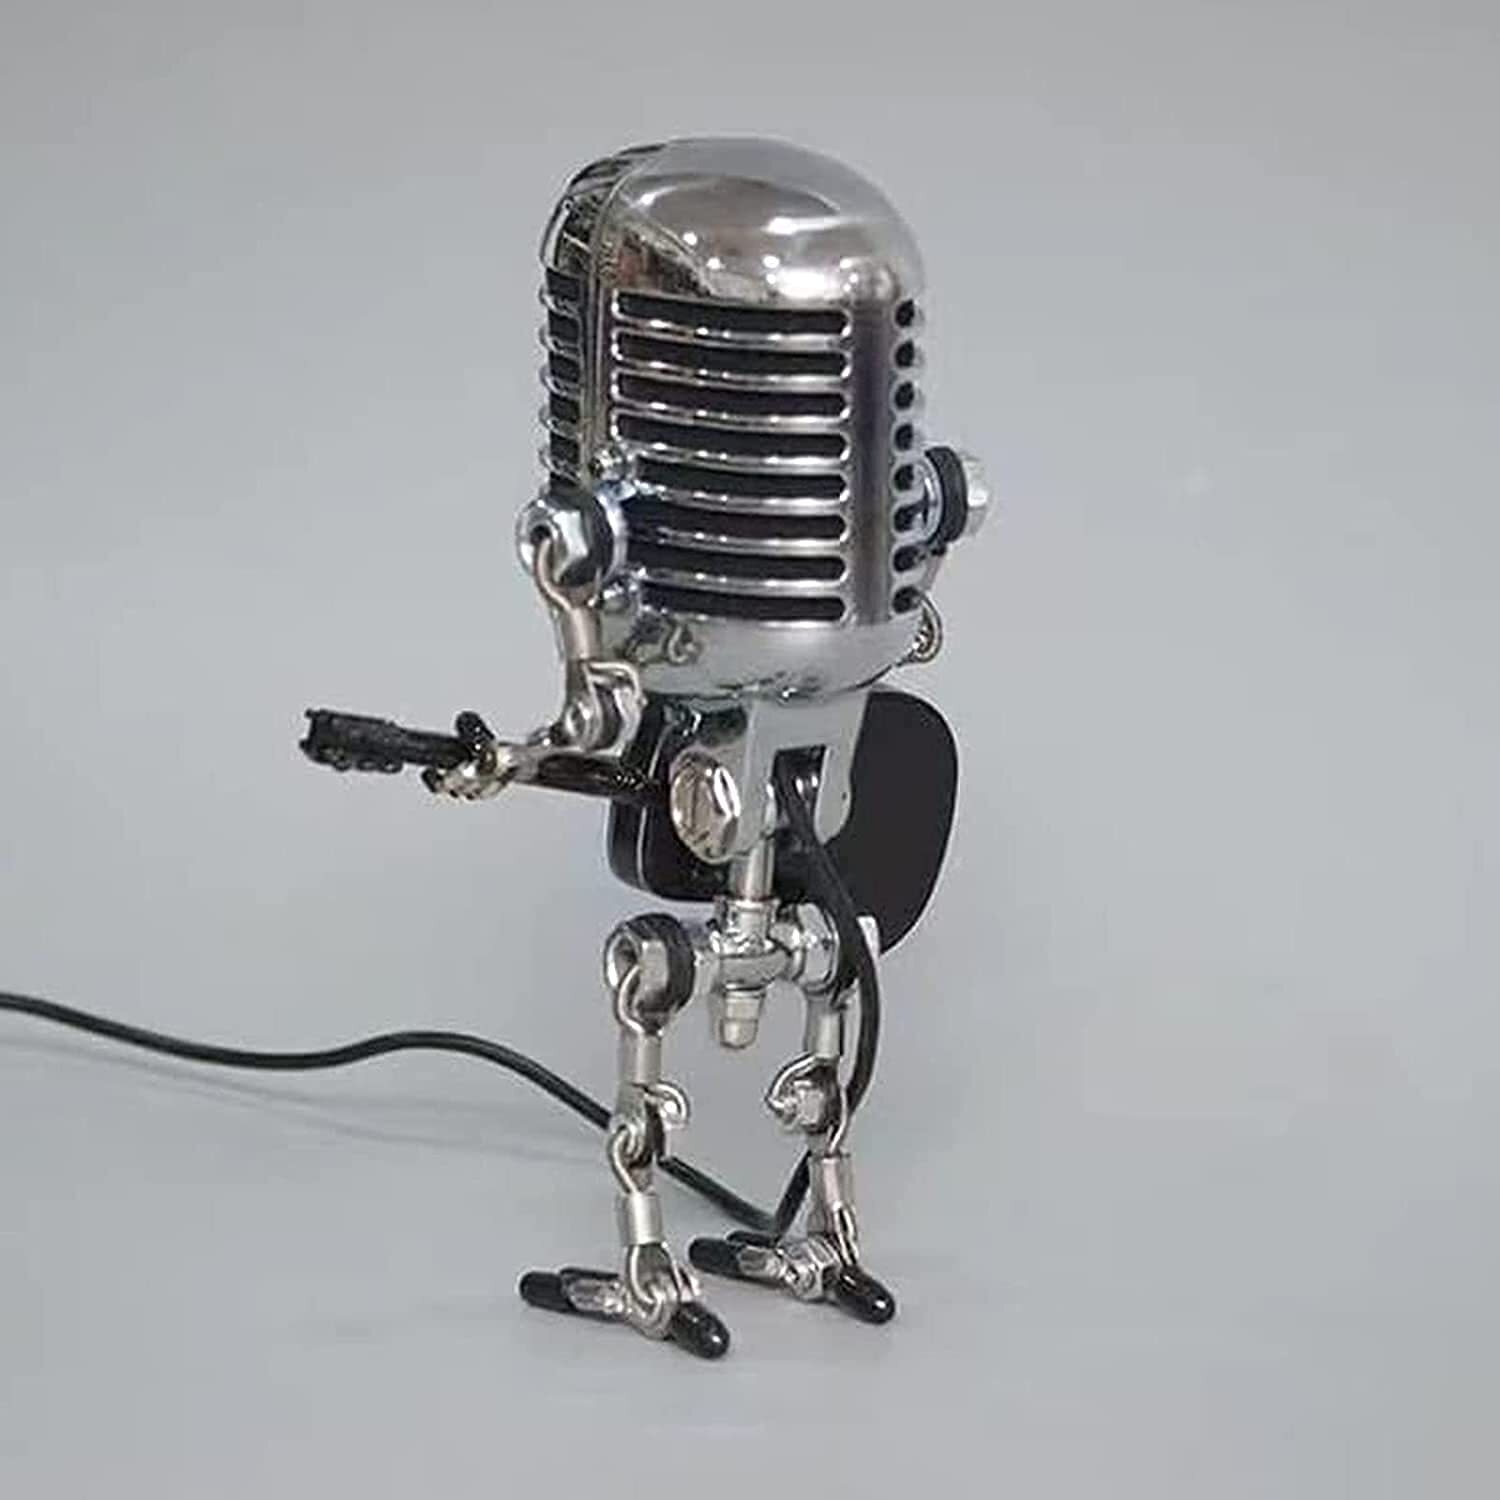 Vintage Metal Microphone Robot Desk Lamp 🎸